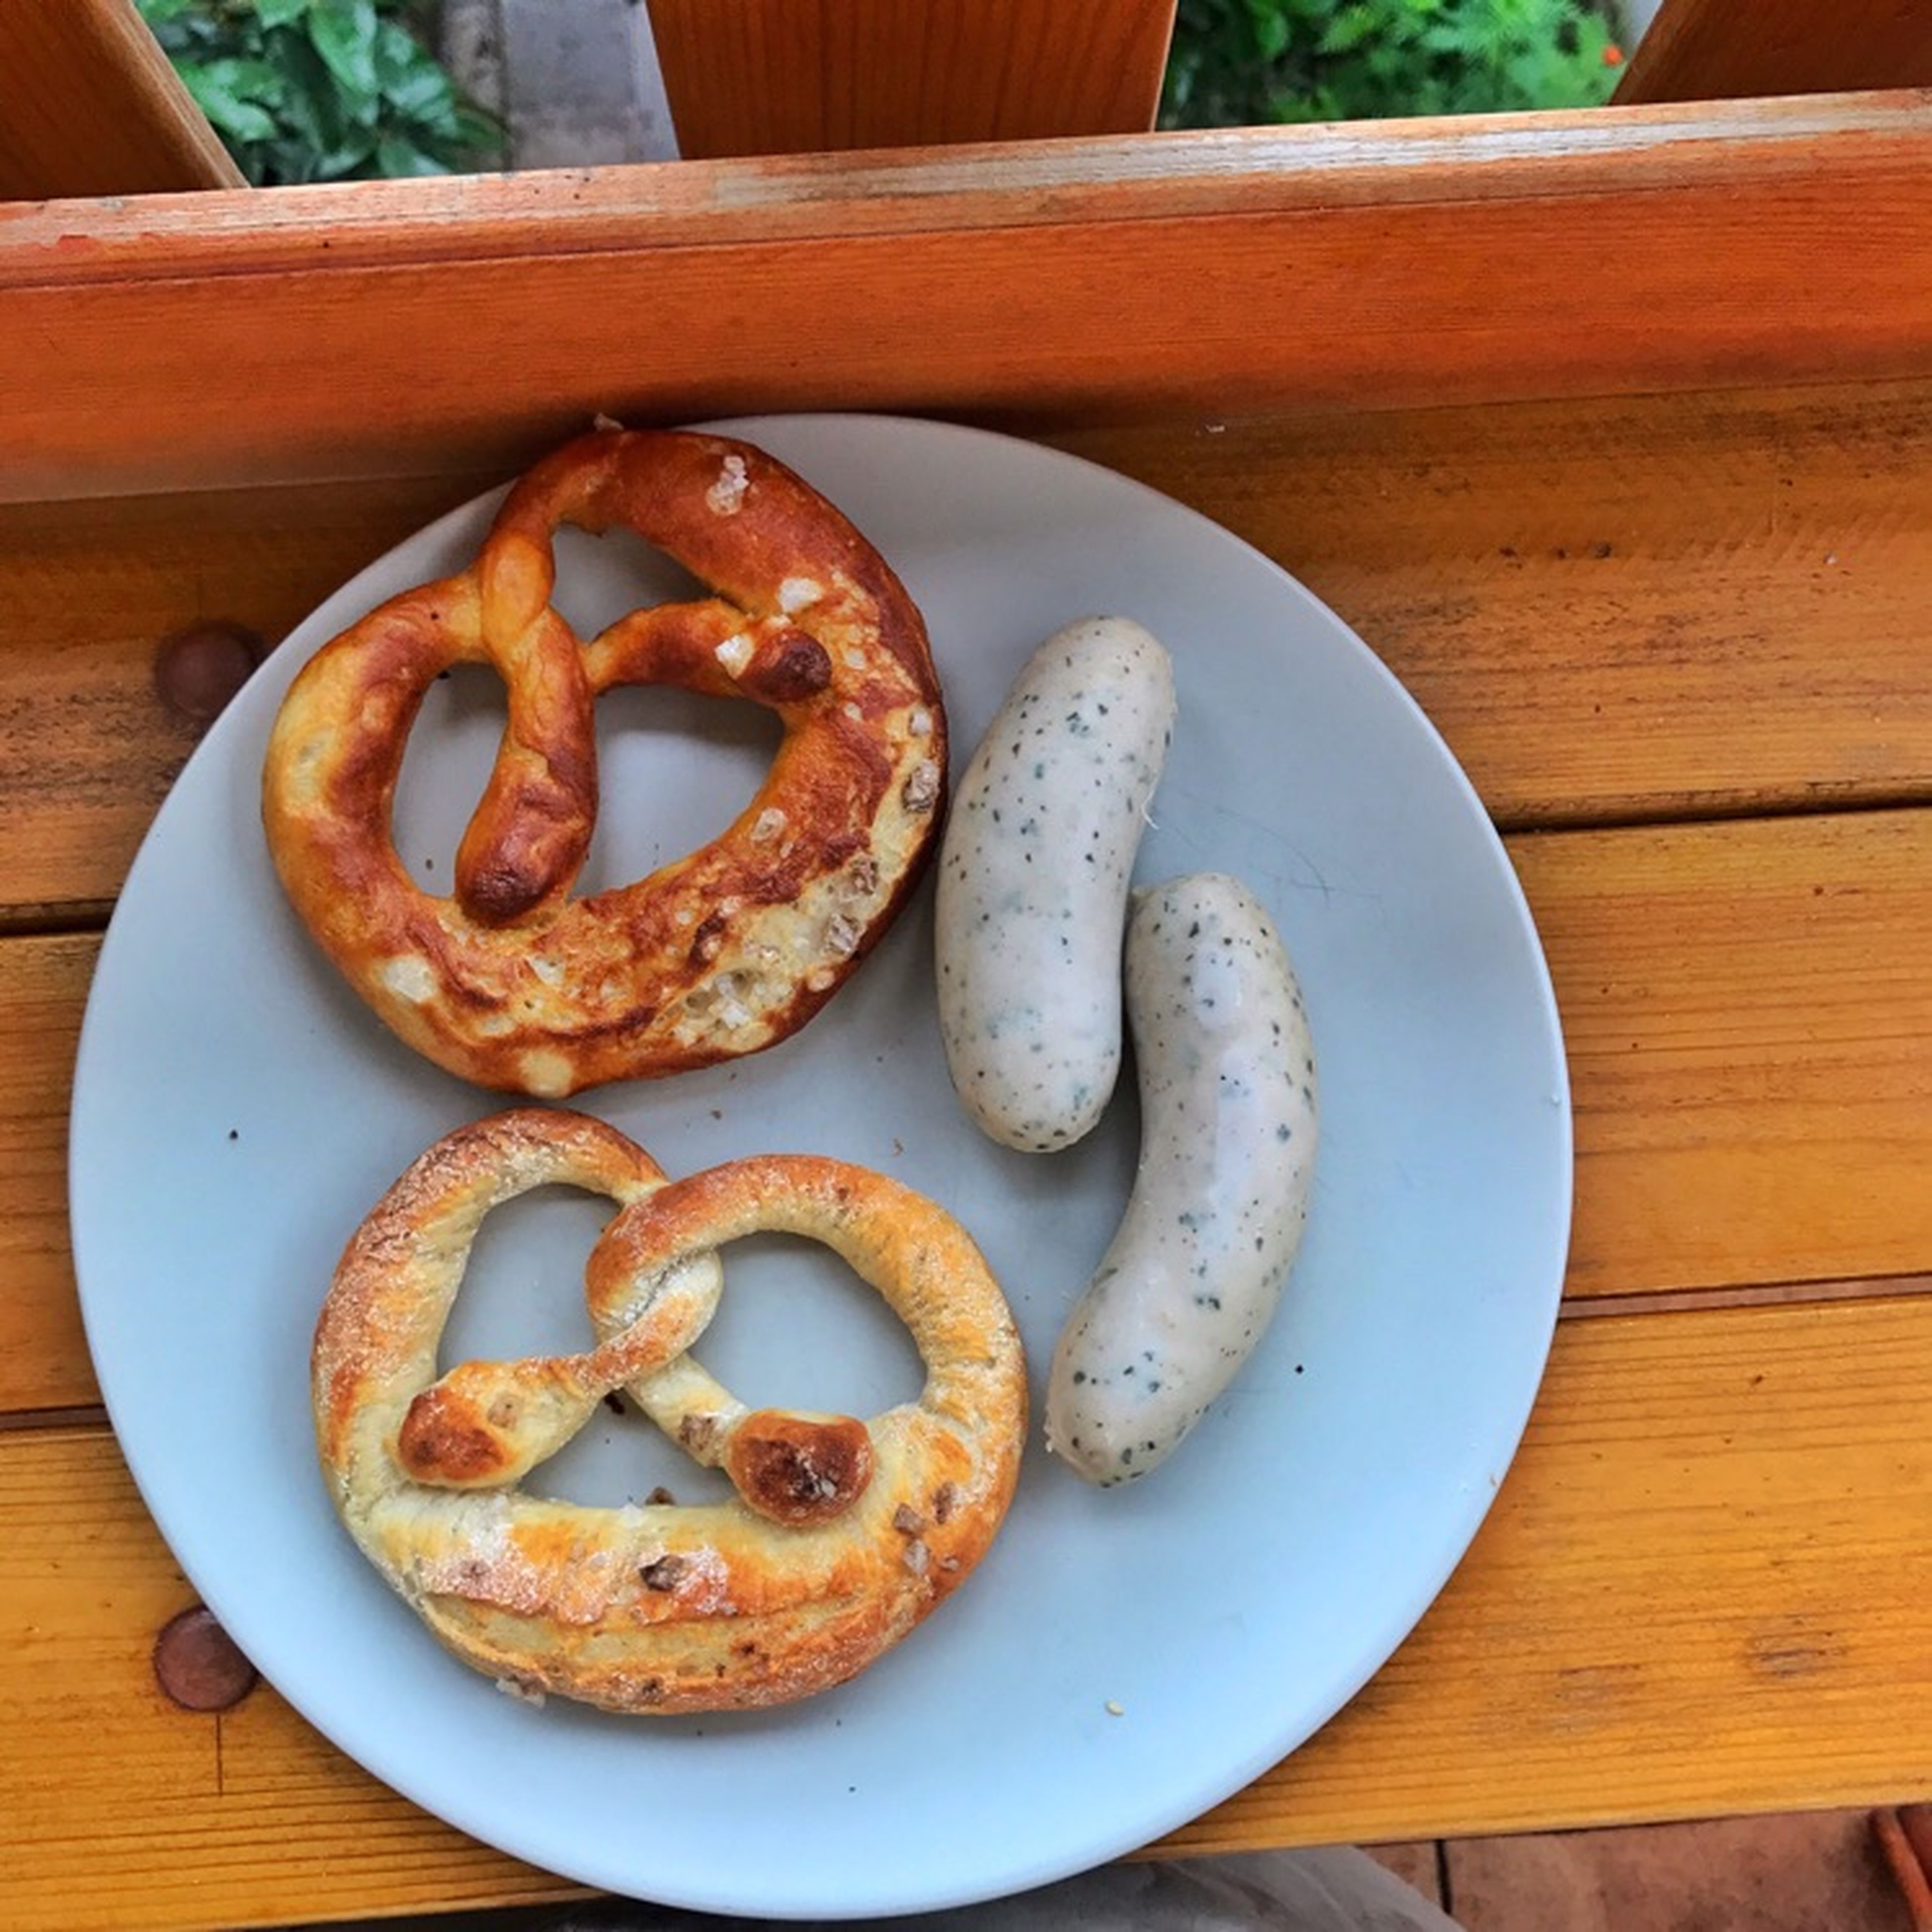 Soft pretzels and veal sausages